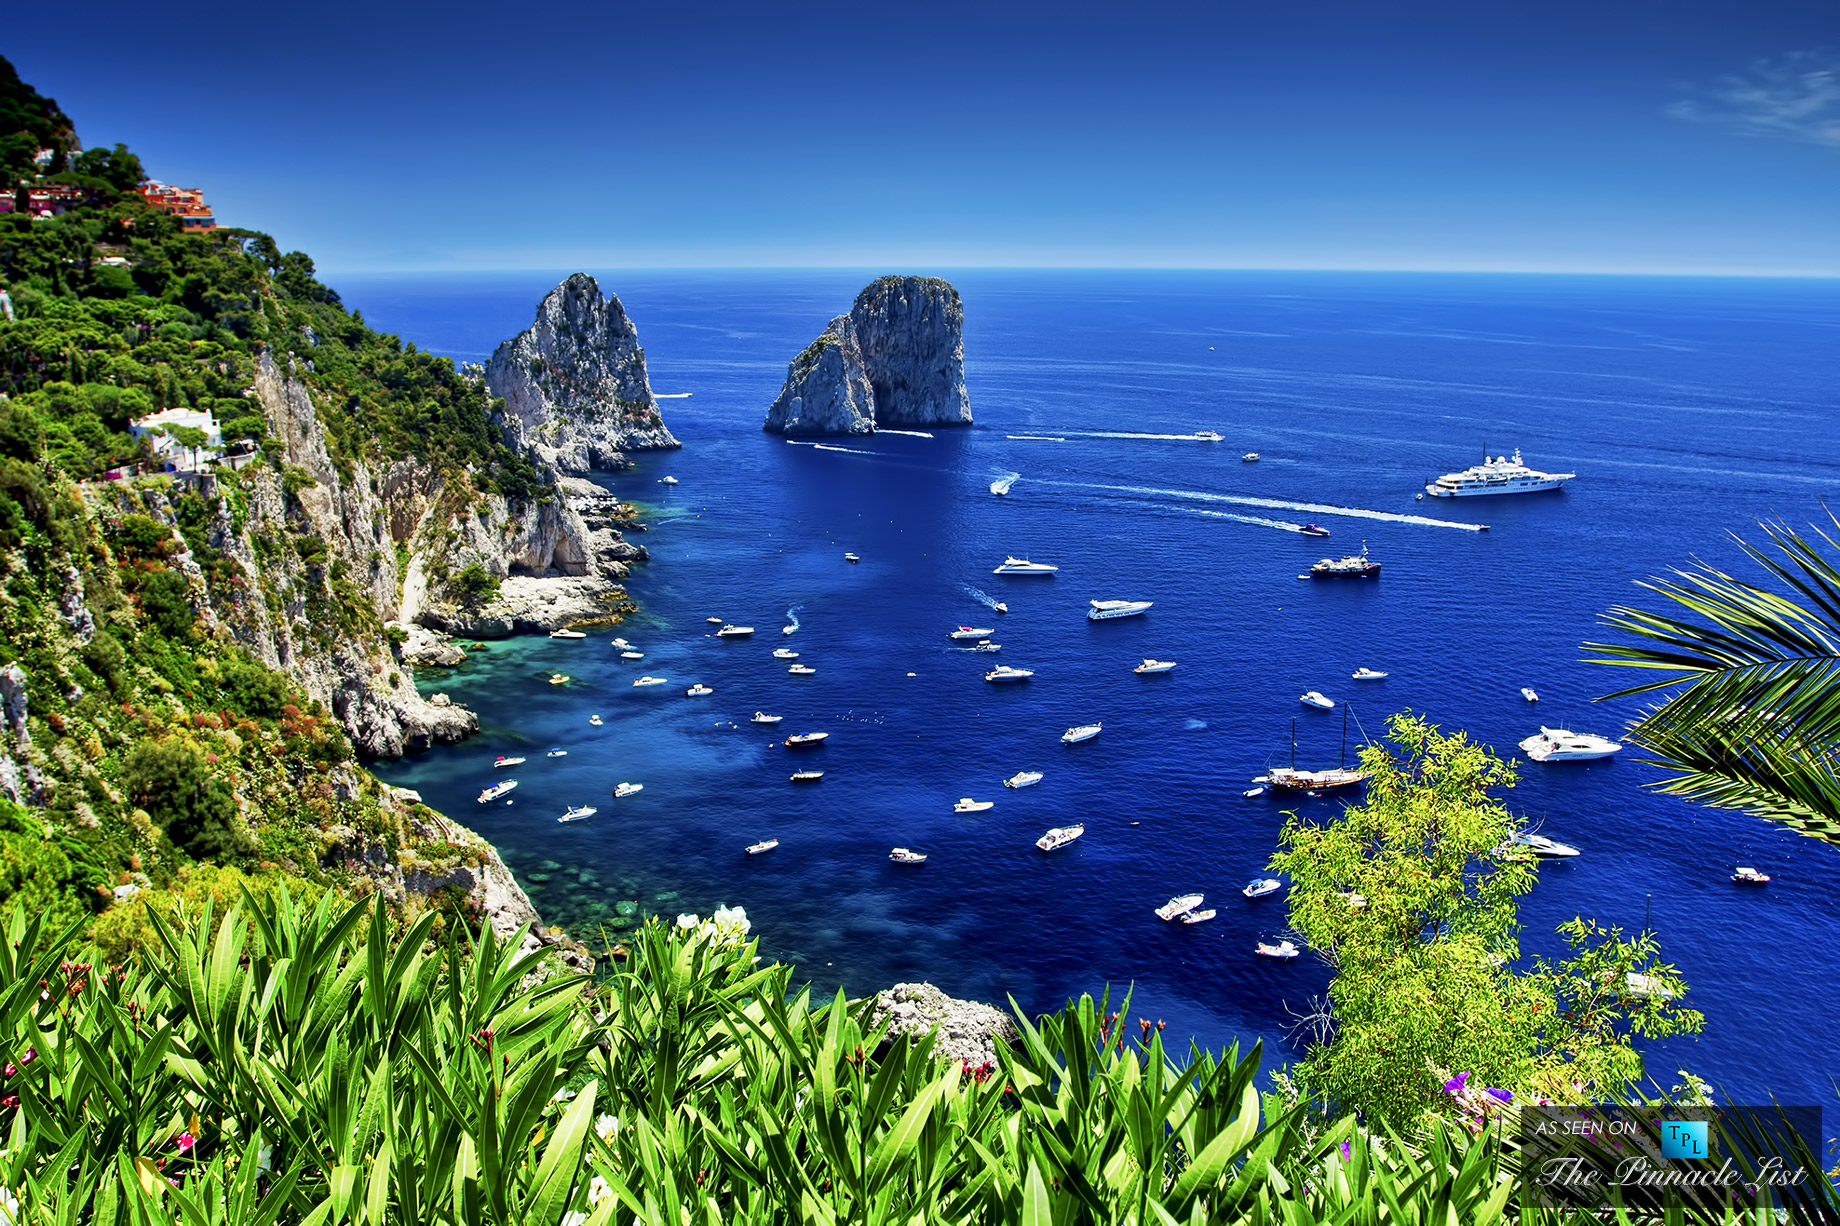 Tyrrhenian Sea off the Sorrento Peninsula - Capri Island, Italy